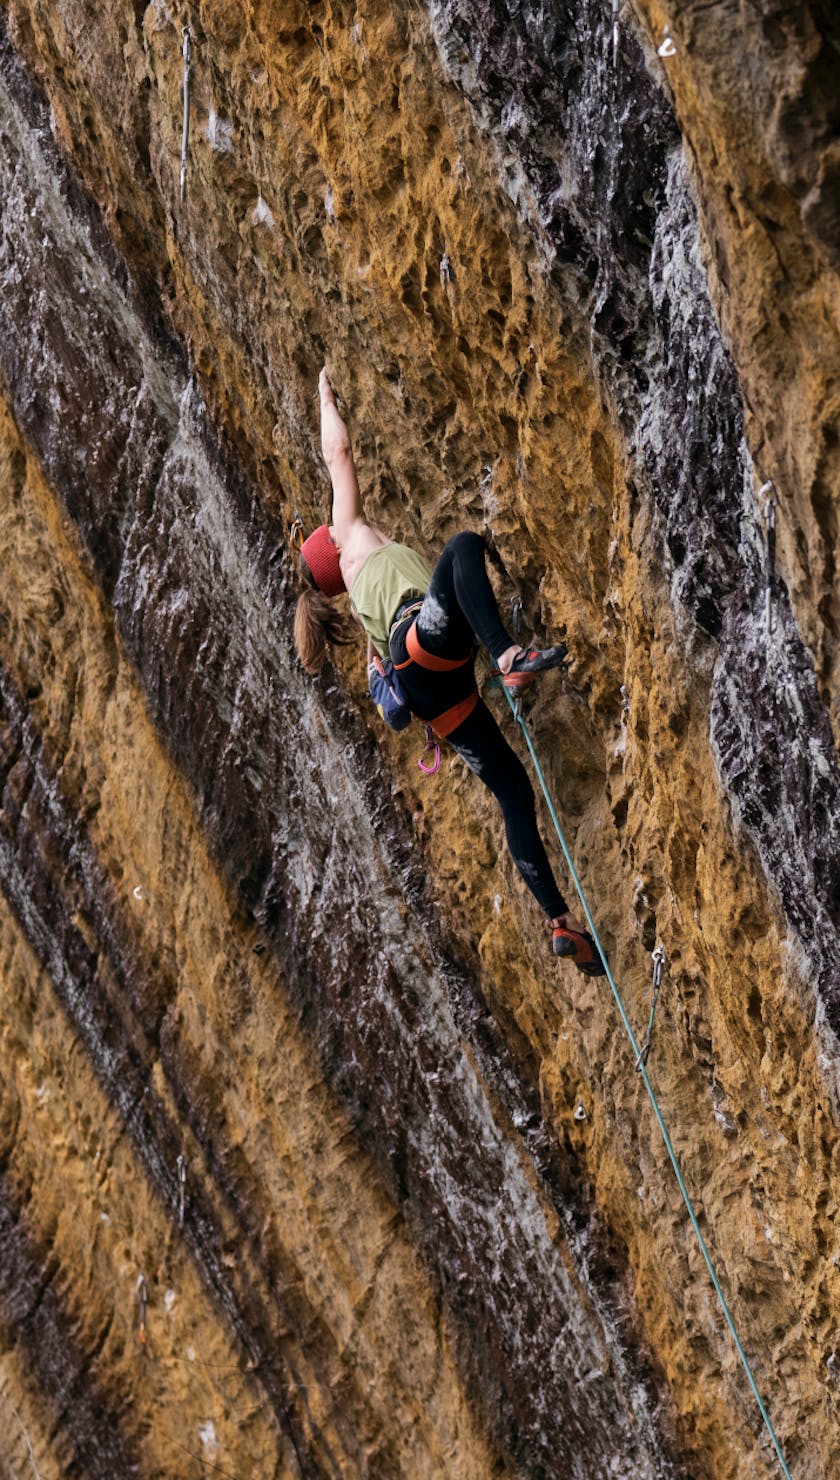 Black Diamond athlete Babsi Zangerl climbing in the Red River Gorge. 